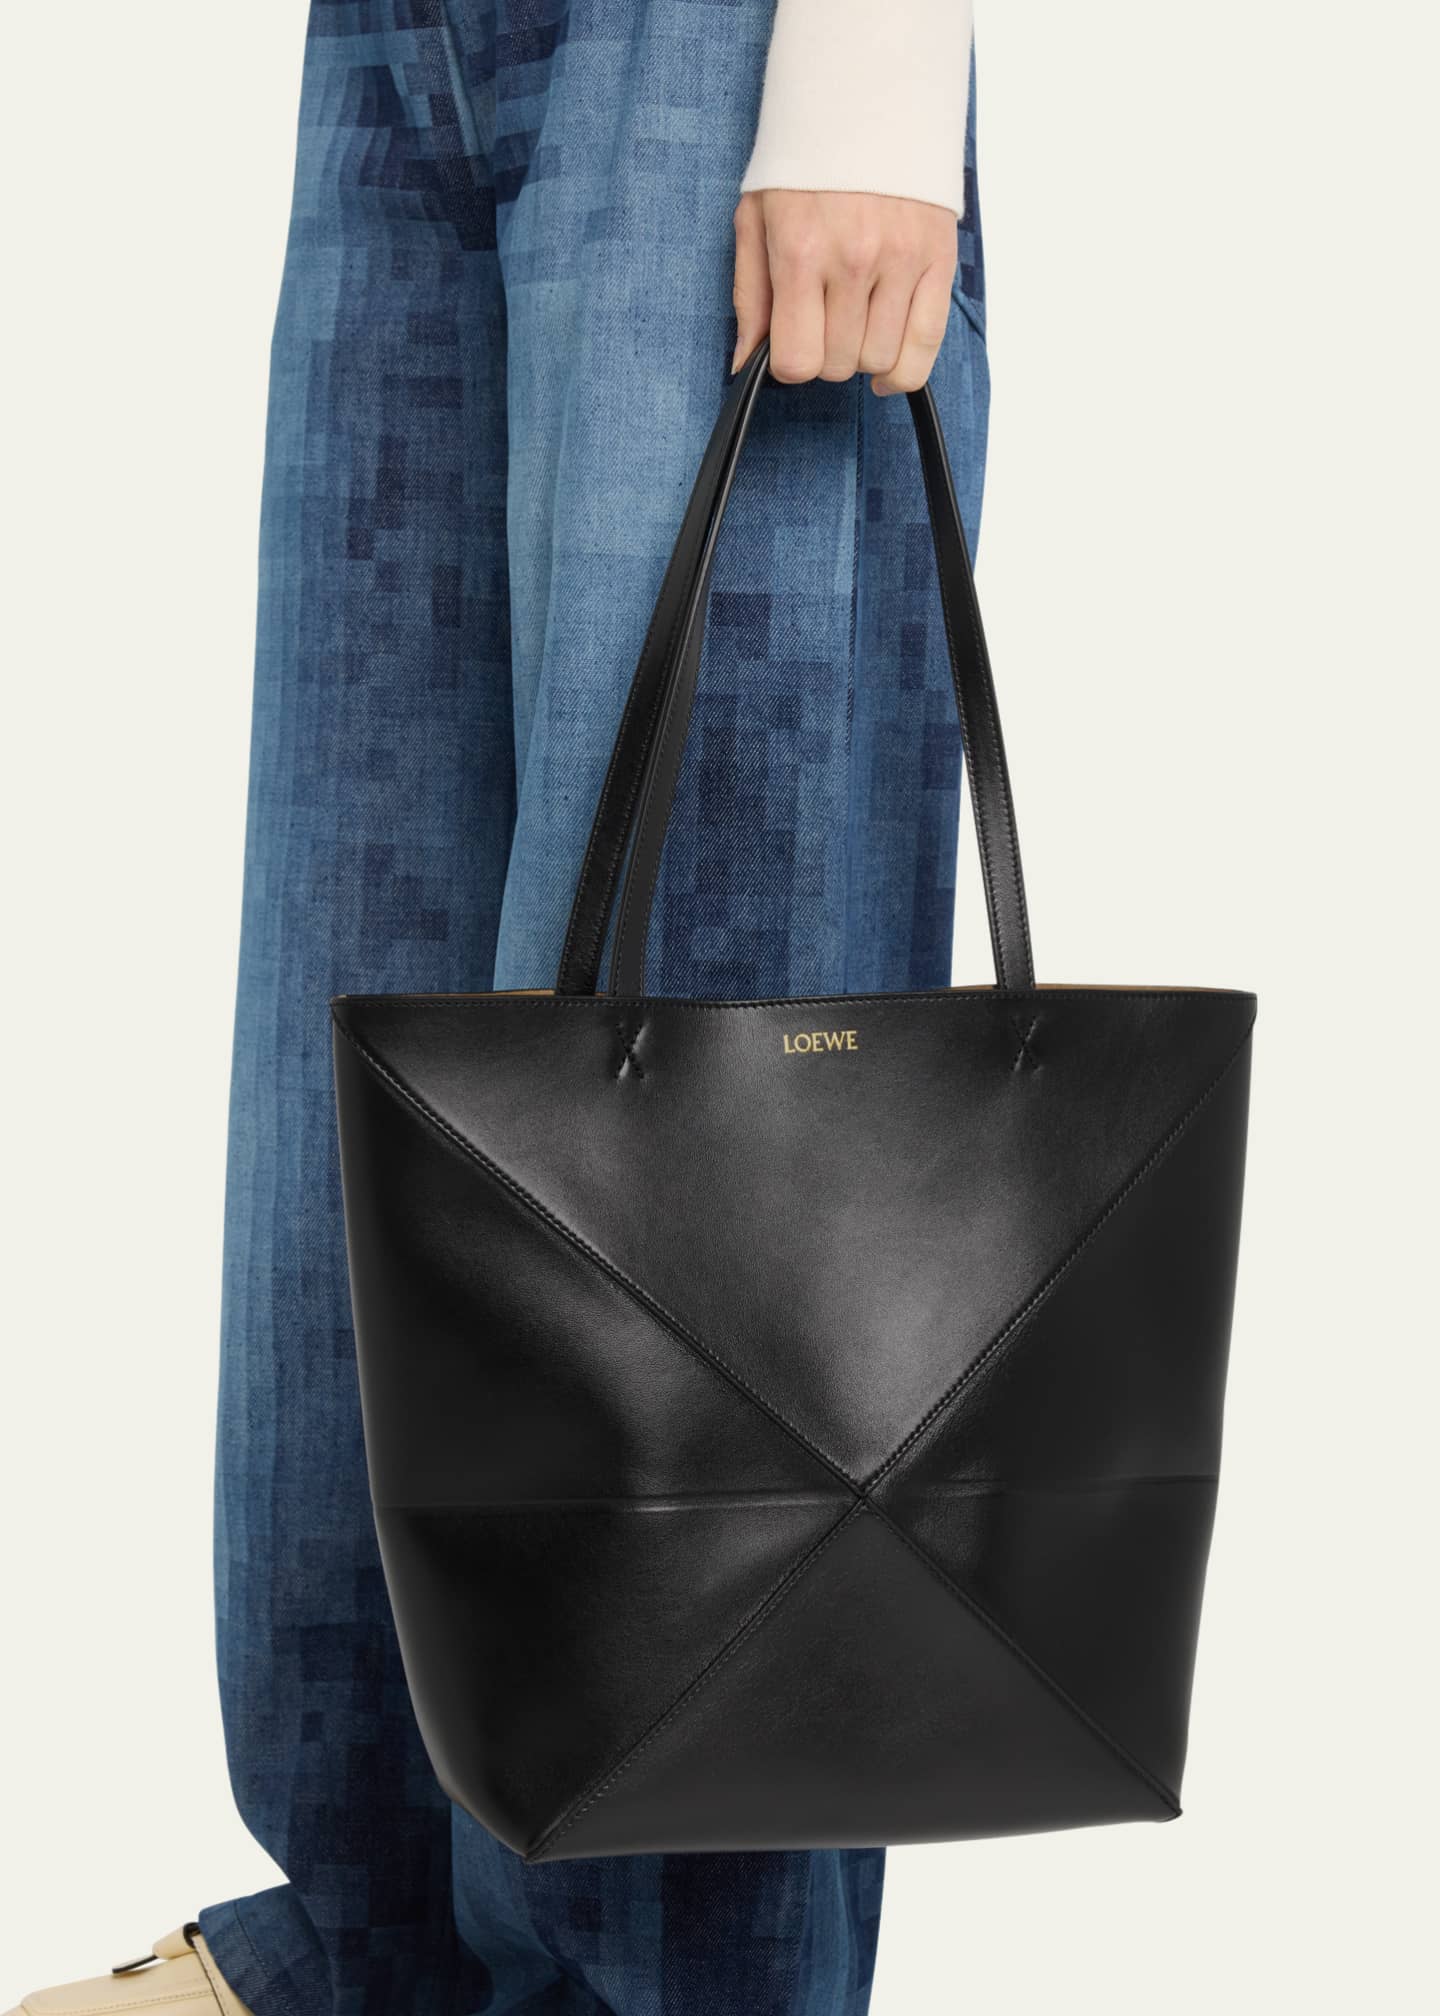 Loewe Puzzle Leather Shoulder Bag